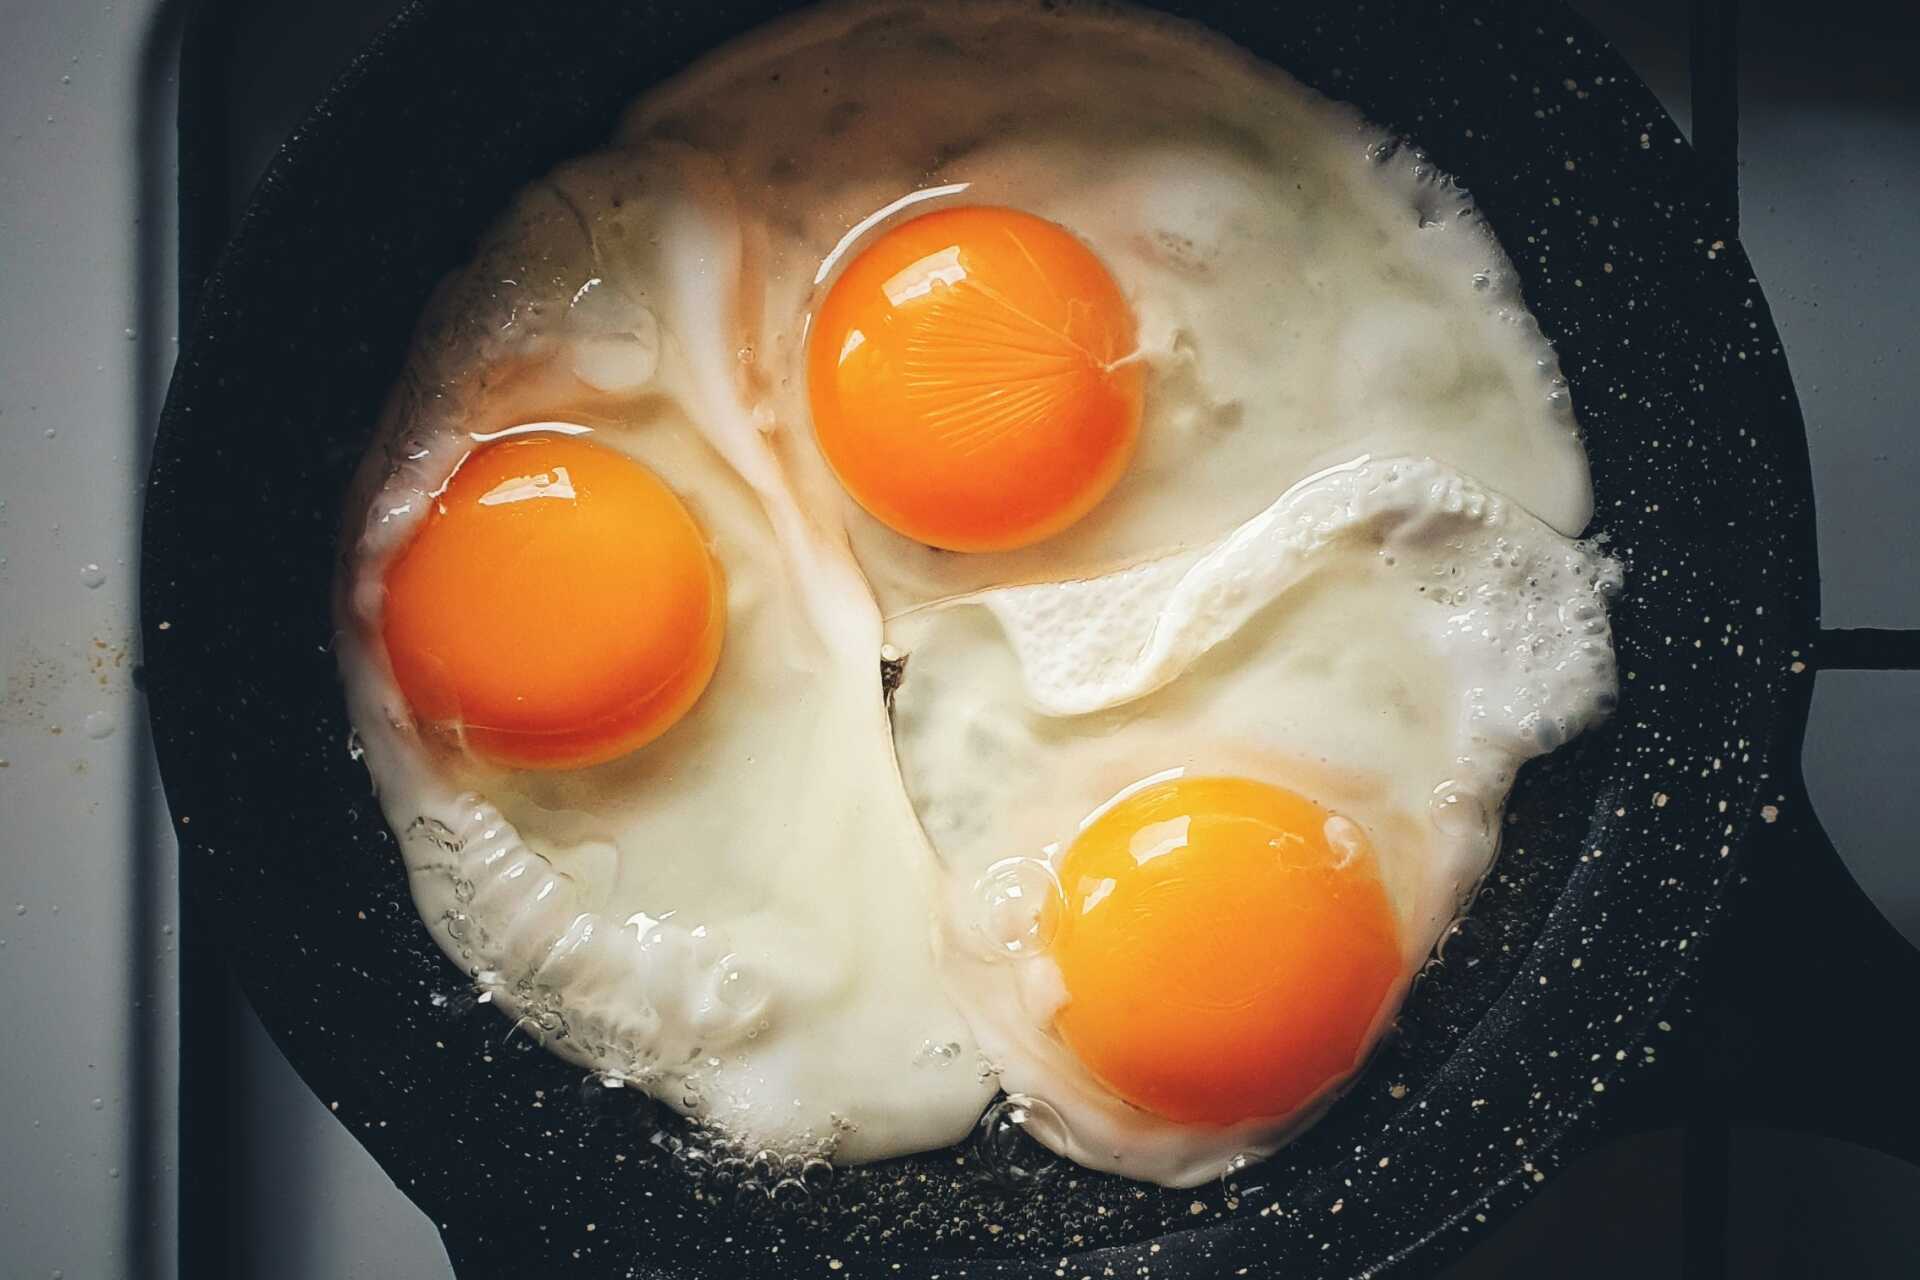 Eggs in a frying pan